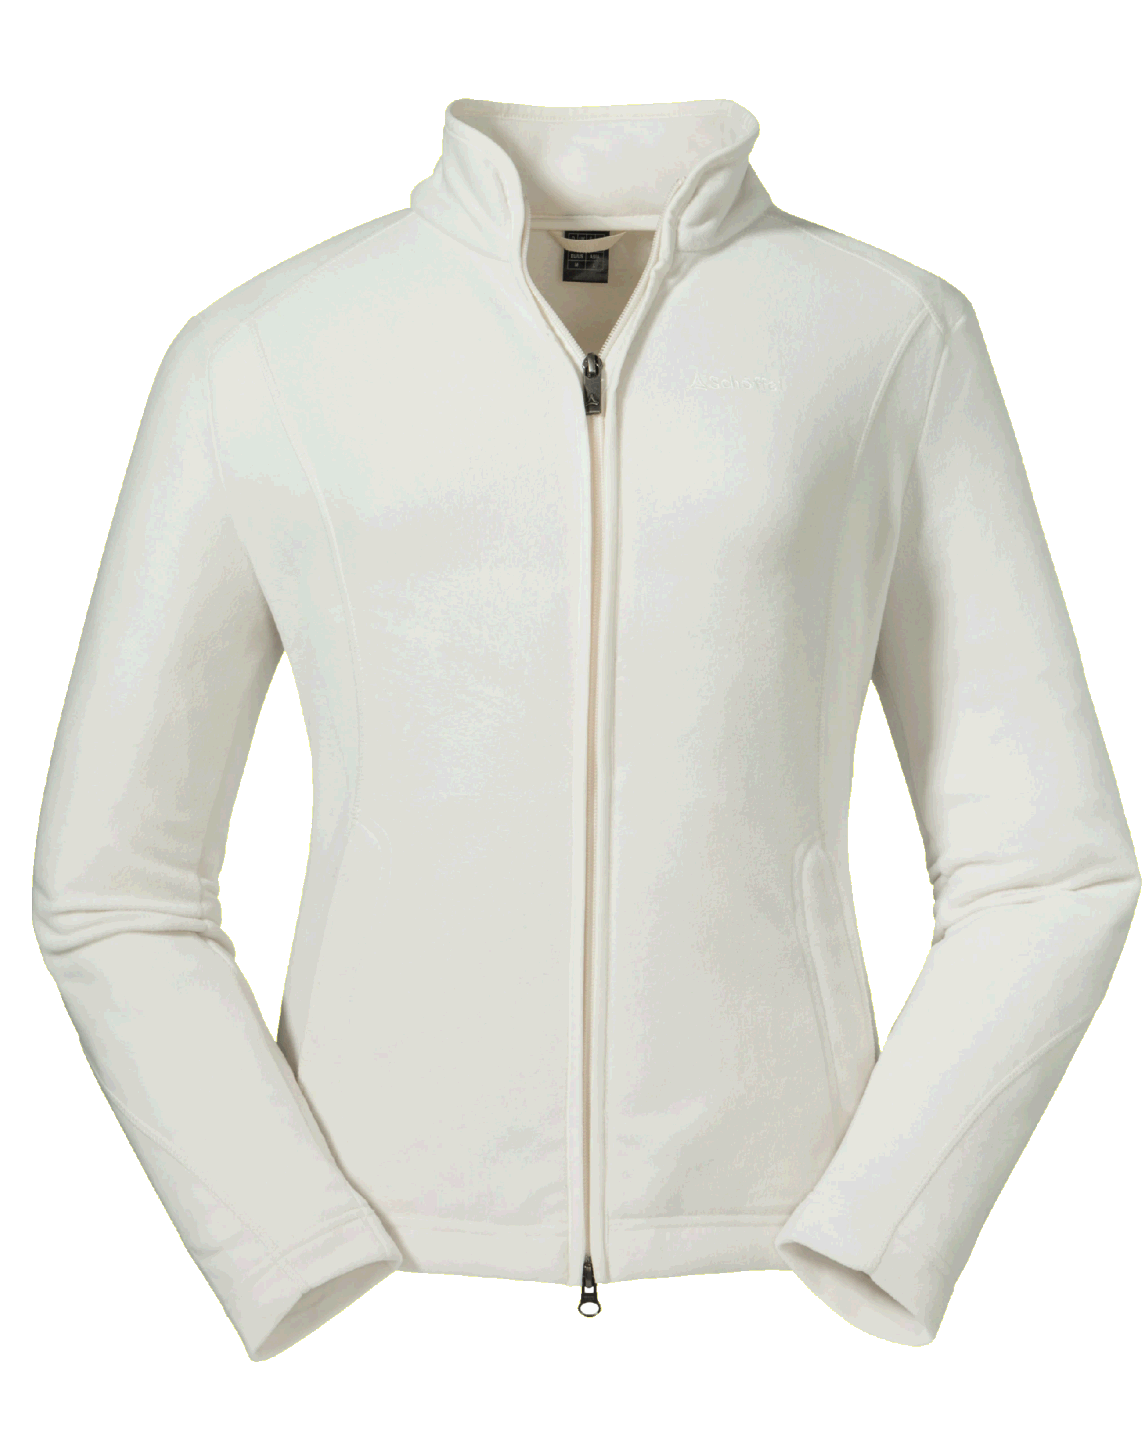 HRM1202 Womens Fullzip Fleece Jacket